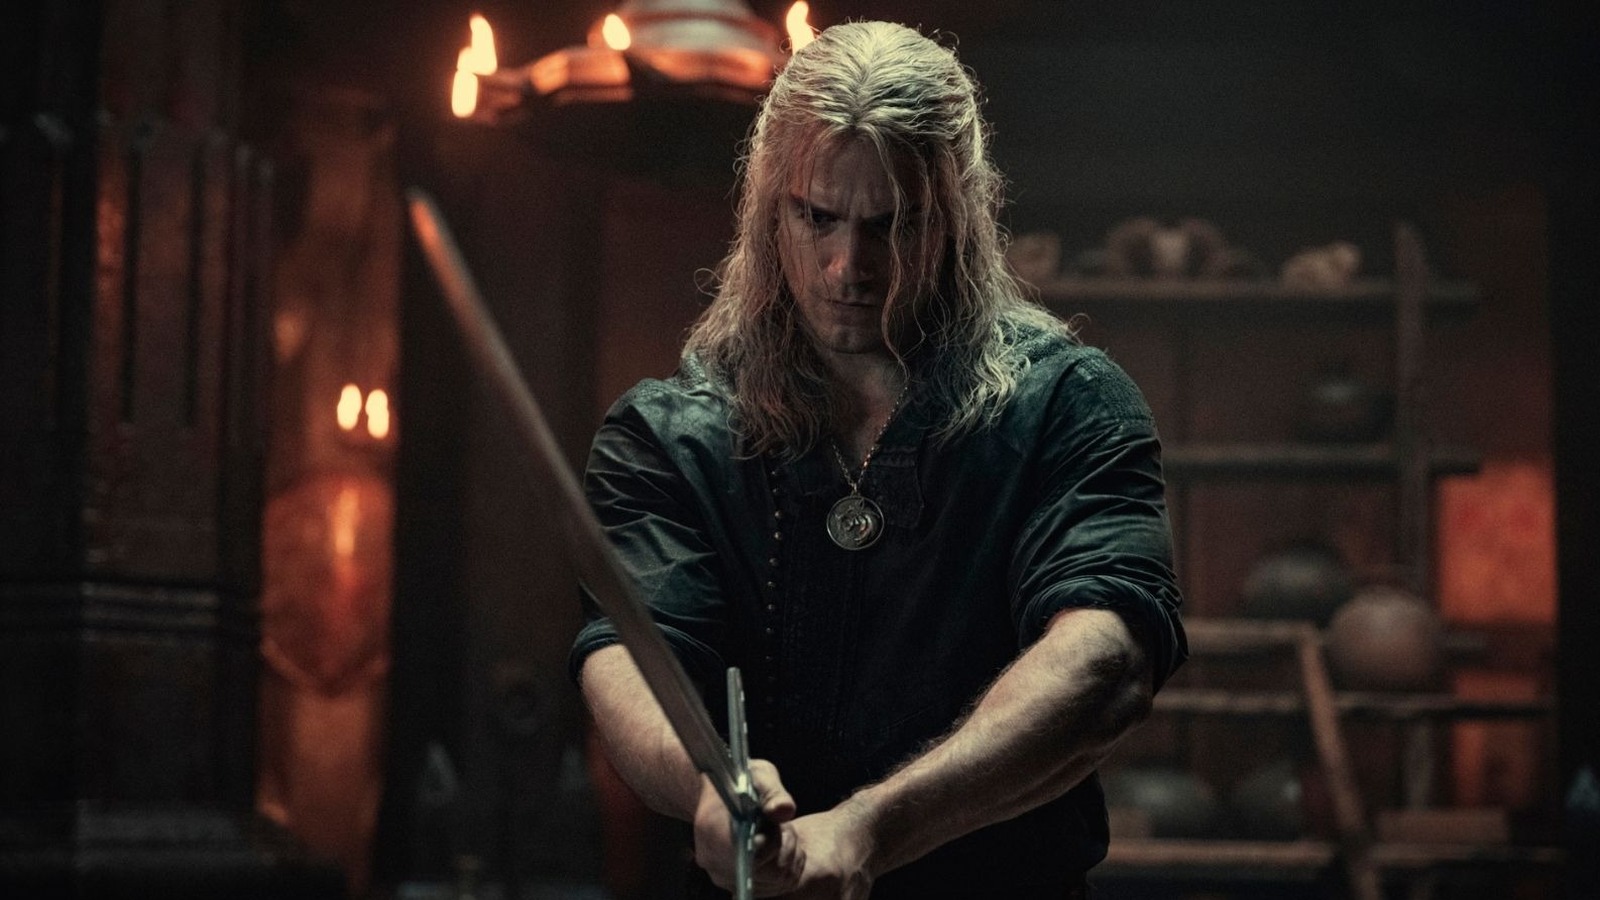 The Witcher' Season 3, 'Blood Origin' Release Dates Set on Netflix